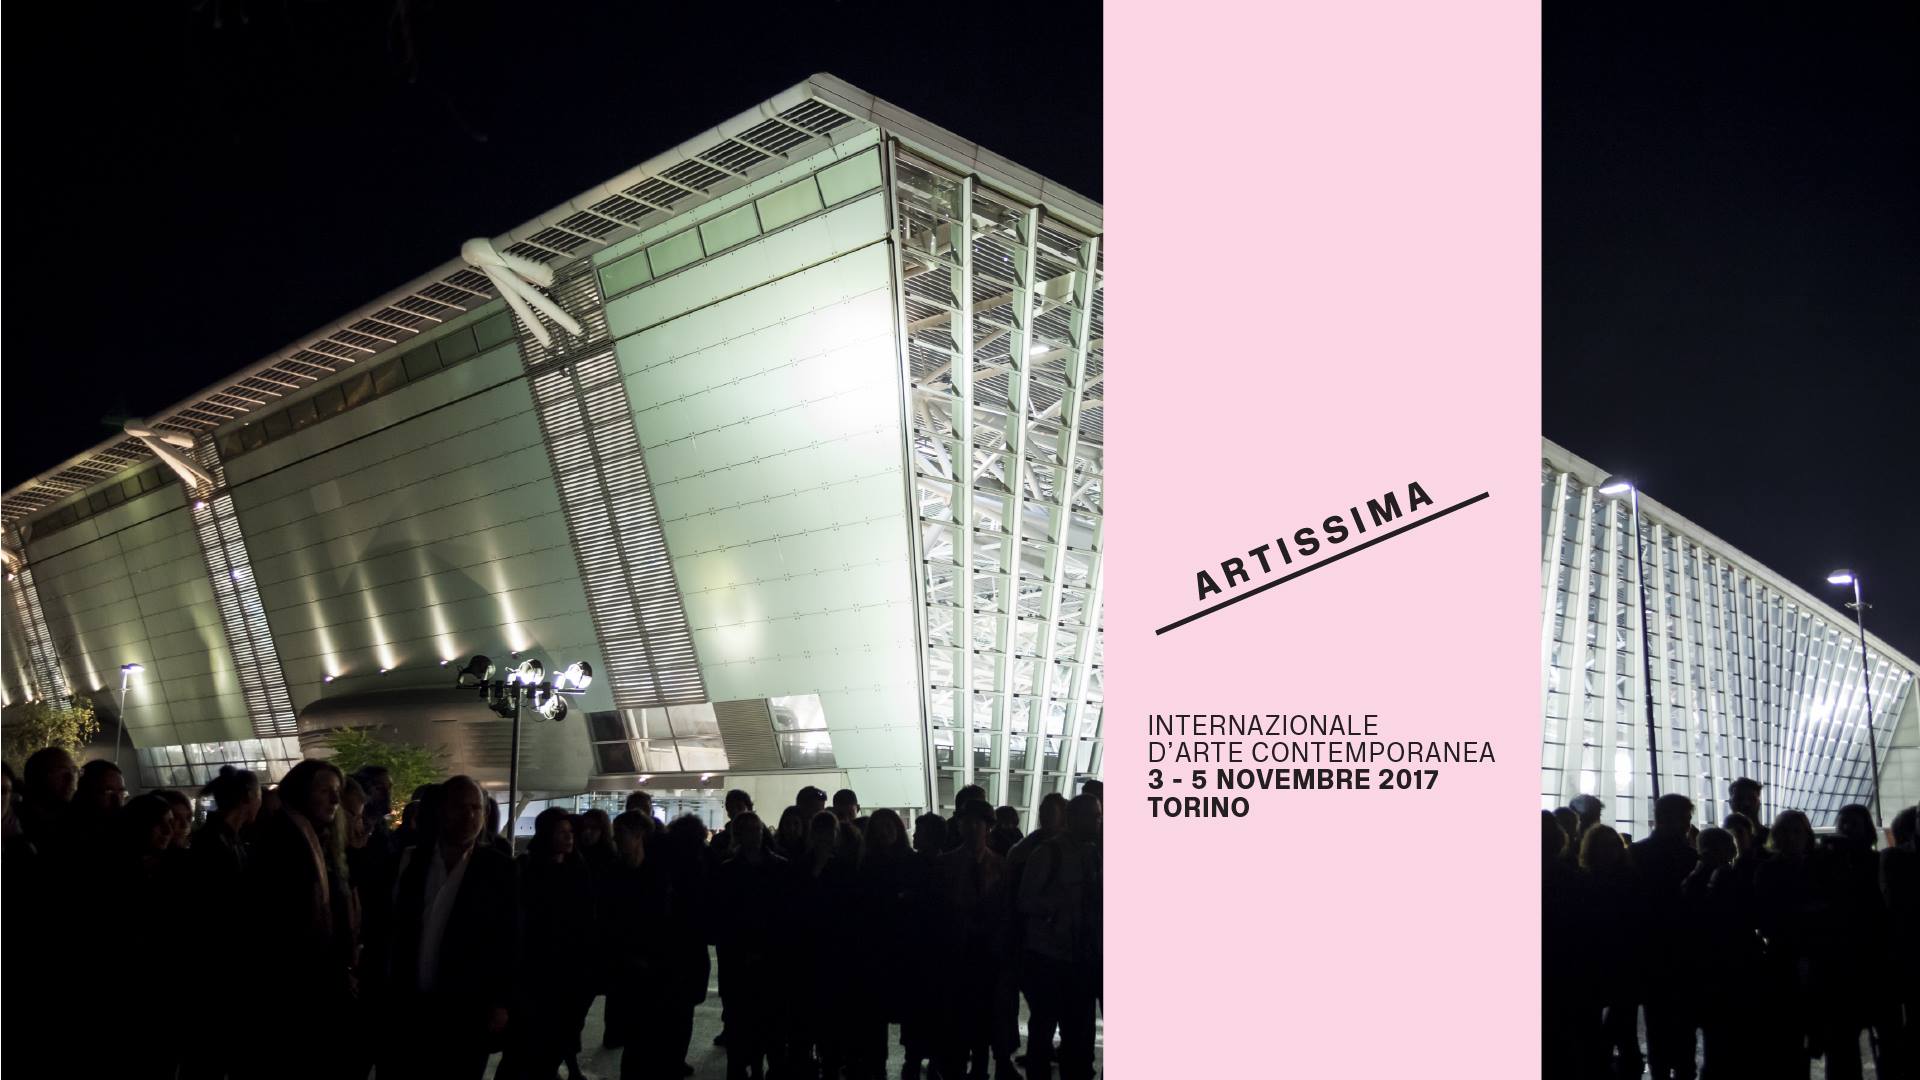 #P420 partecipa ad #Artissima 2017, Torino - 